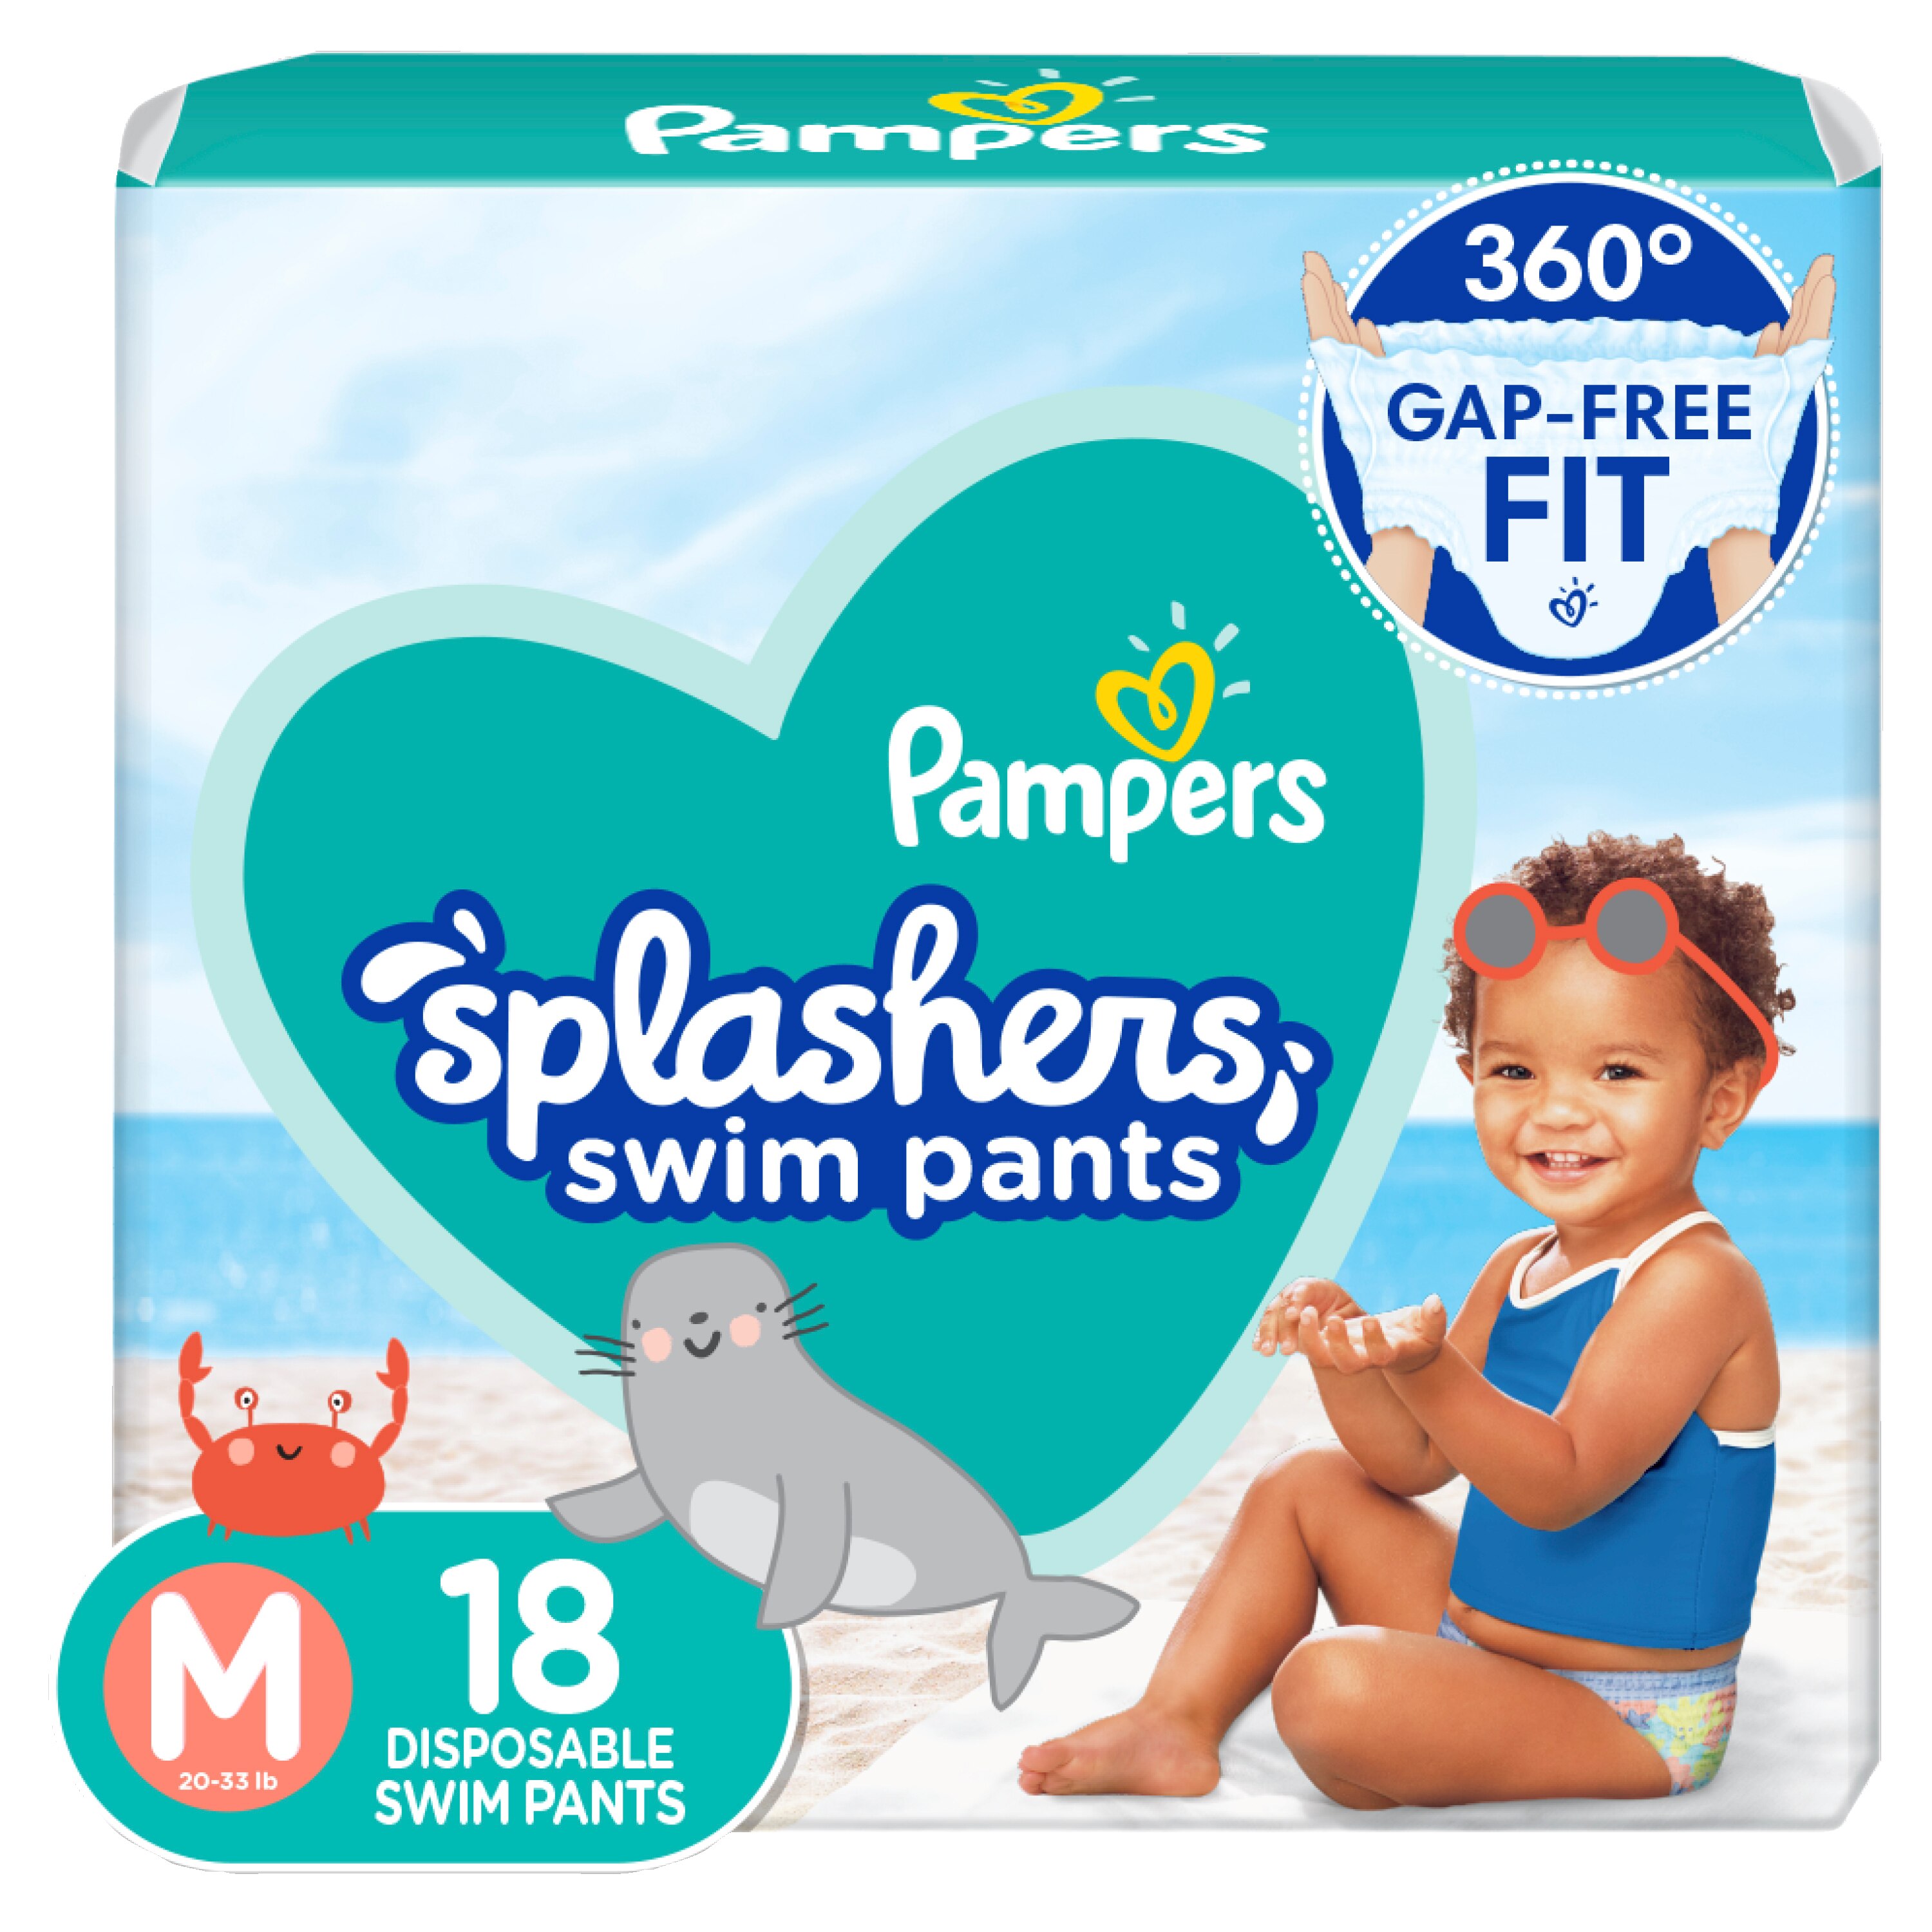 Pampers Splashers Disposable Swim Pants, Size M, 18 Ct , CVS